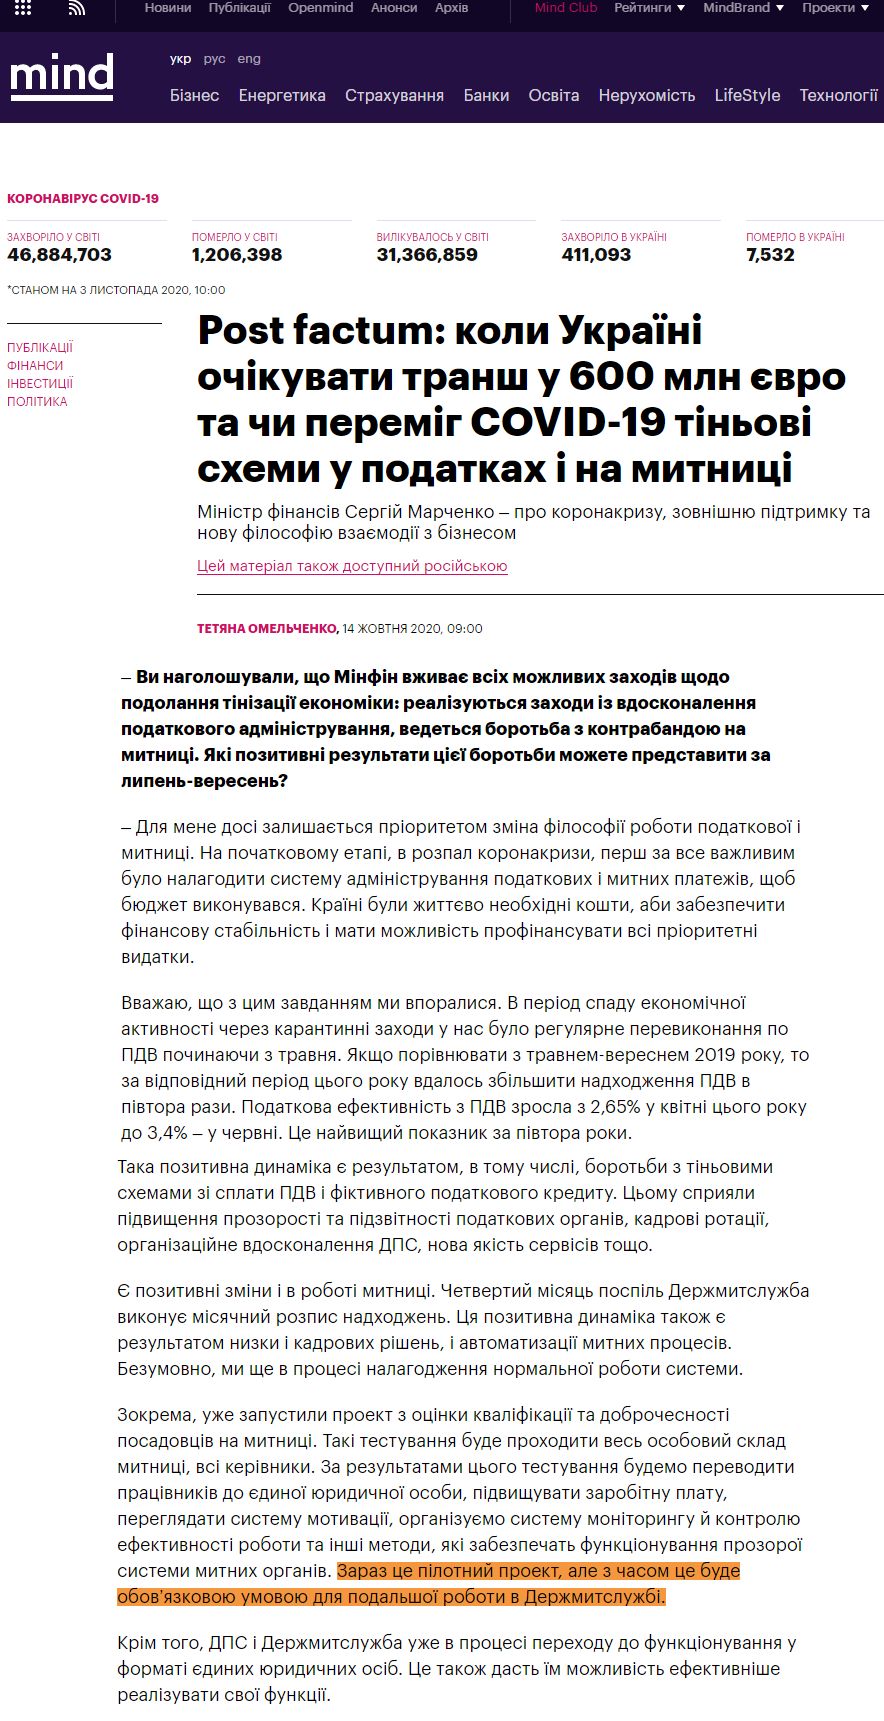 https://mind.ua/publications/20217053-post-factum-koli-ukrayini-ochikuvati-transh-u-600-mln-evro-ta-chi-peremig-covid-19-tinovi-shemi-u-poda